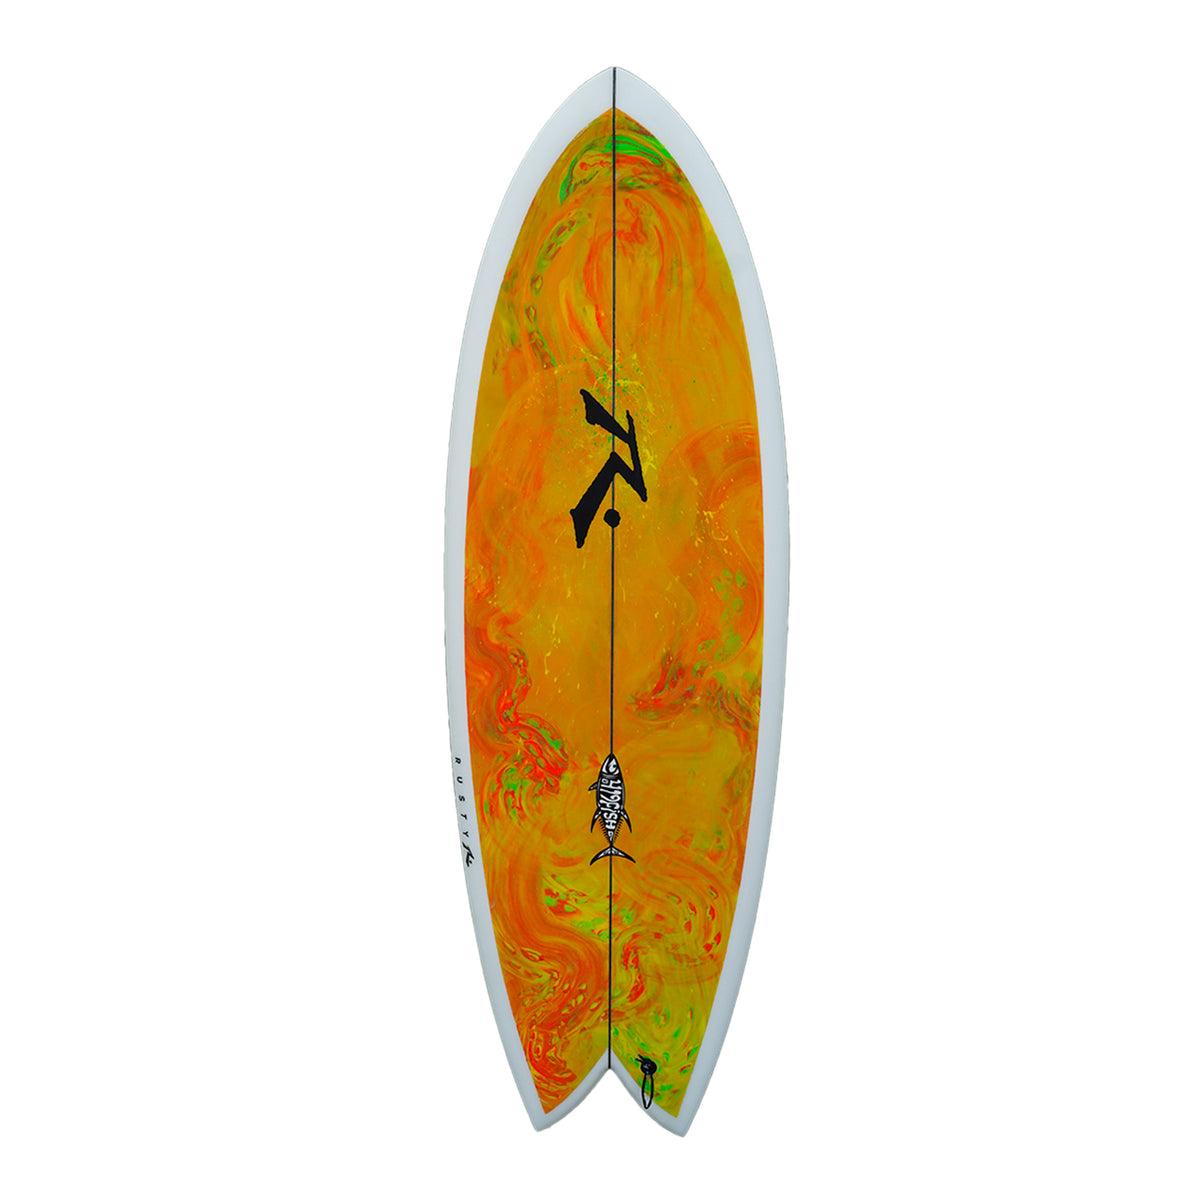 419fish - Alternative - Rusty Surfboards - Top View - Orange Green Swirl